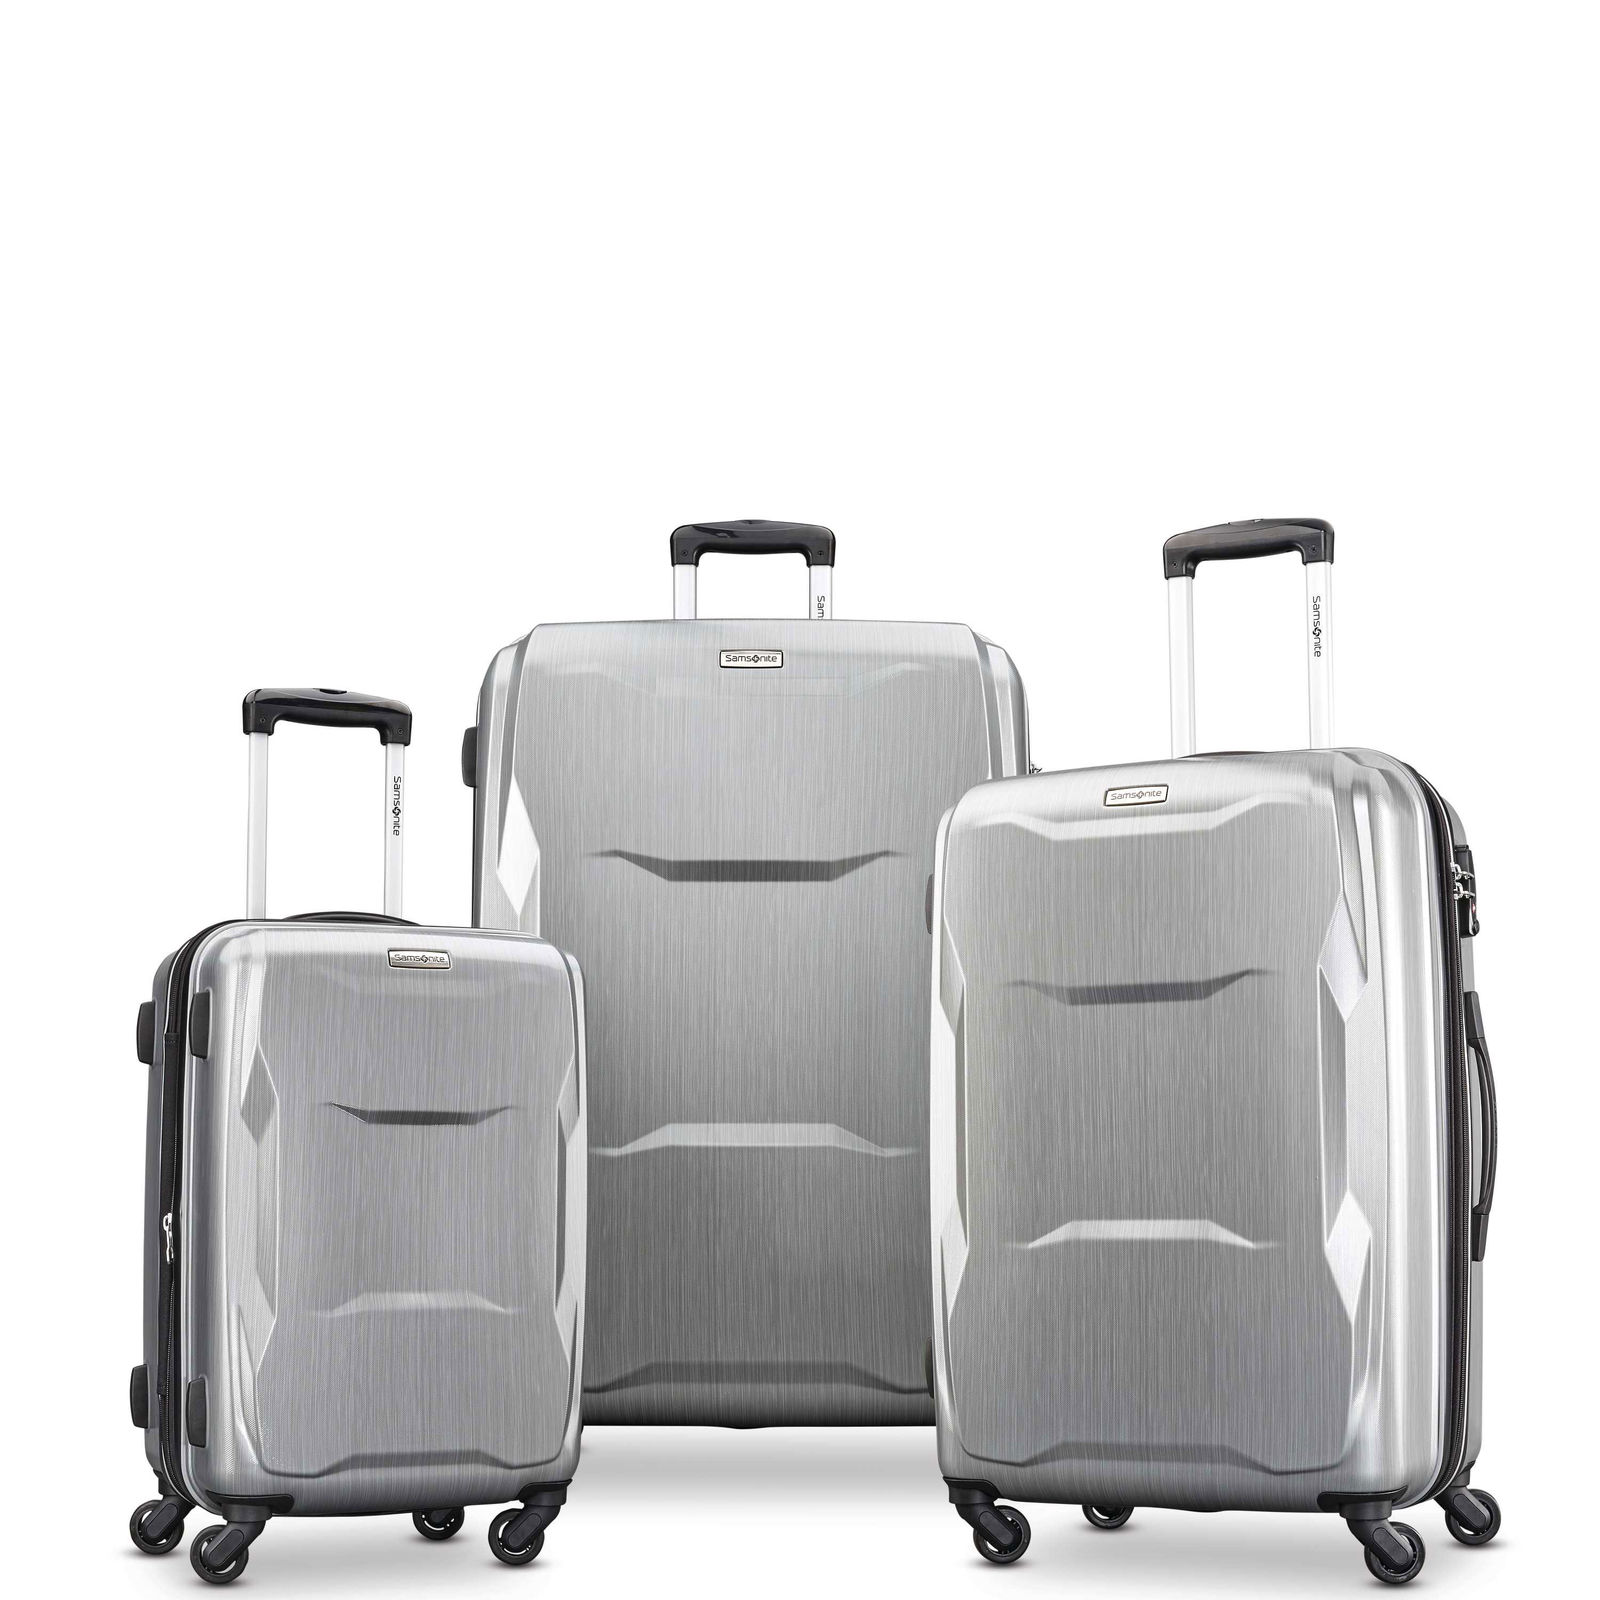 Samsonite Pivot 3-piece luggage set for $179, free shipping